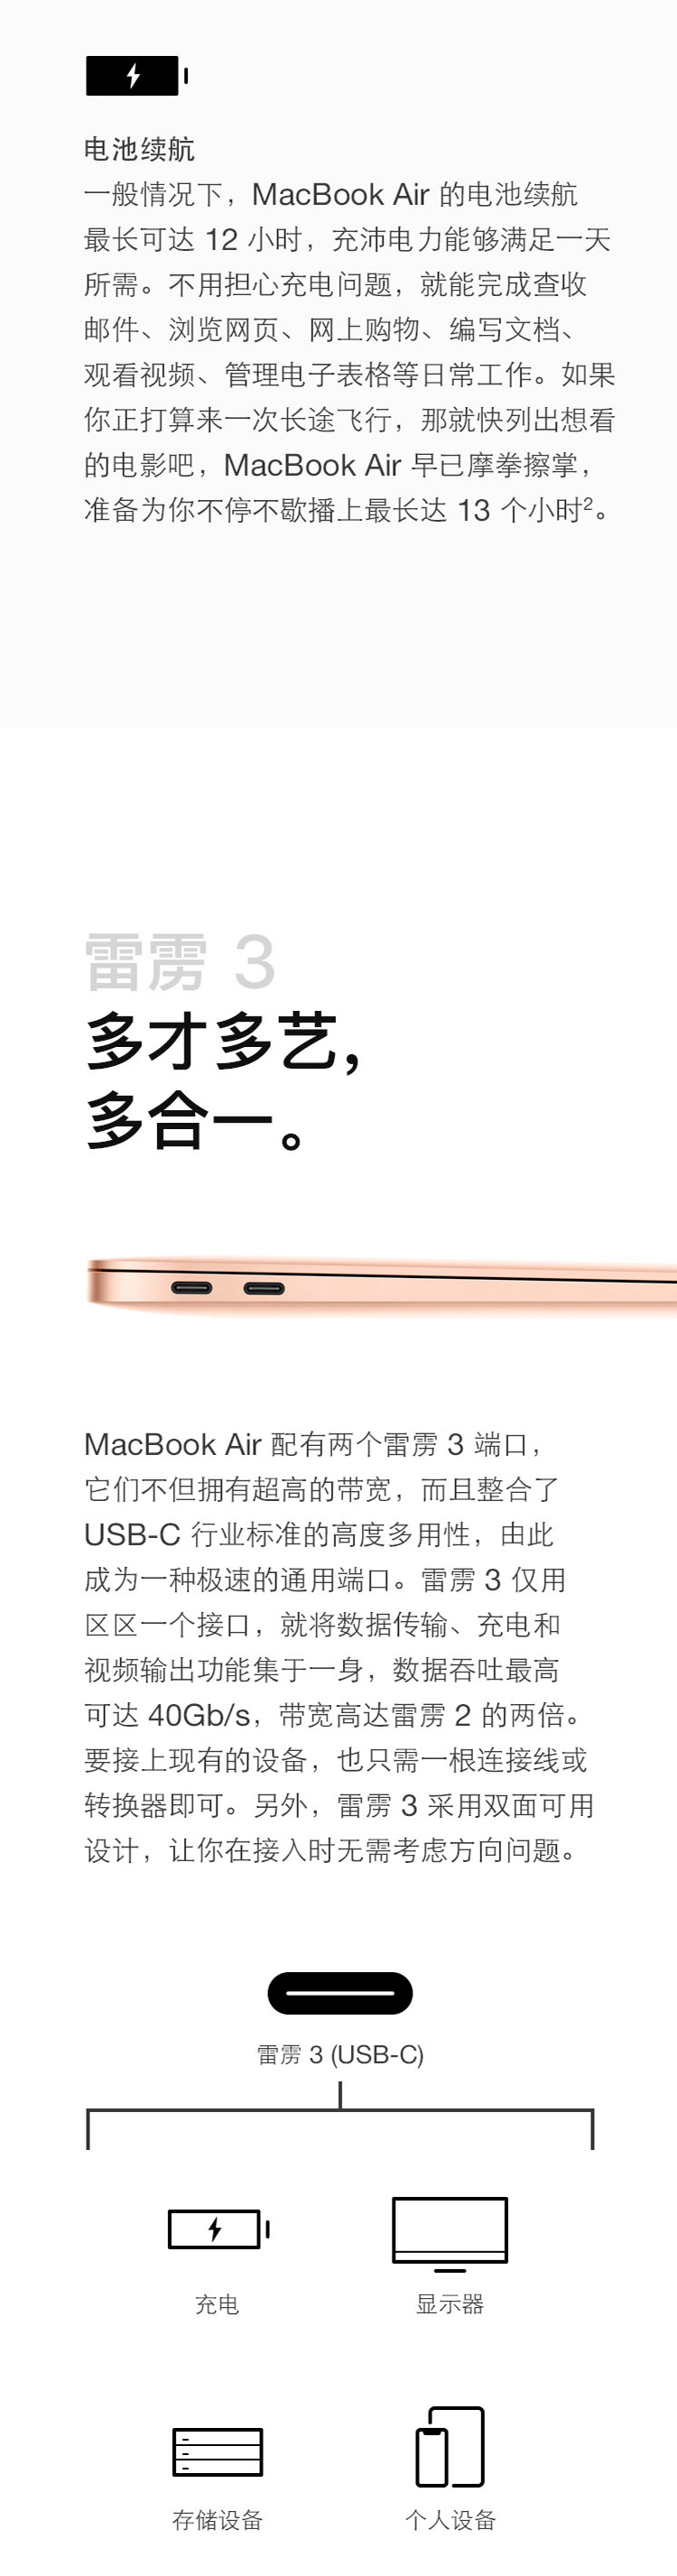 Apple MacBook Air 13.3英寸八代Core i5 /8GB内存/128GB闪存 笔记本电脑 深空灰色 2018款Retina屏 MRE82CH/A